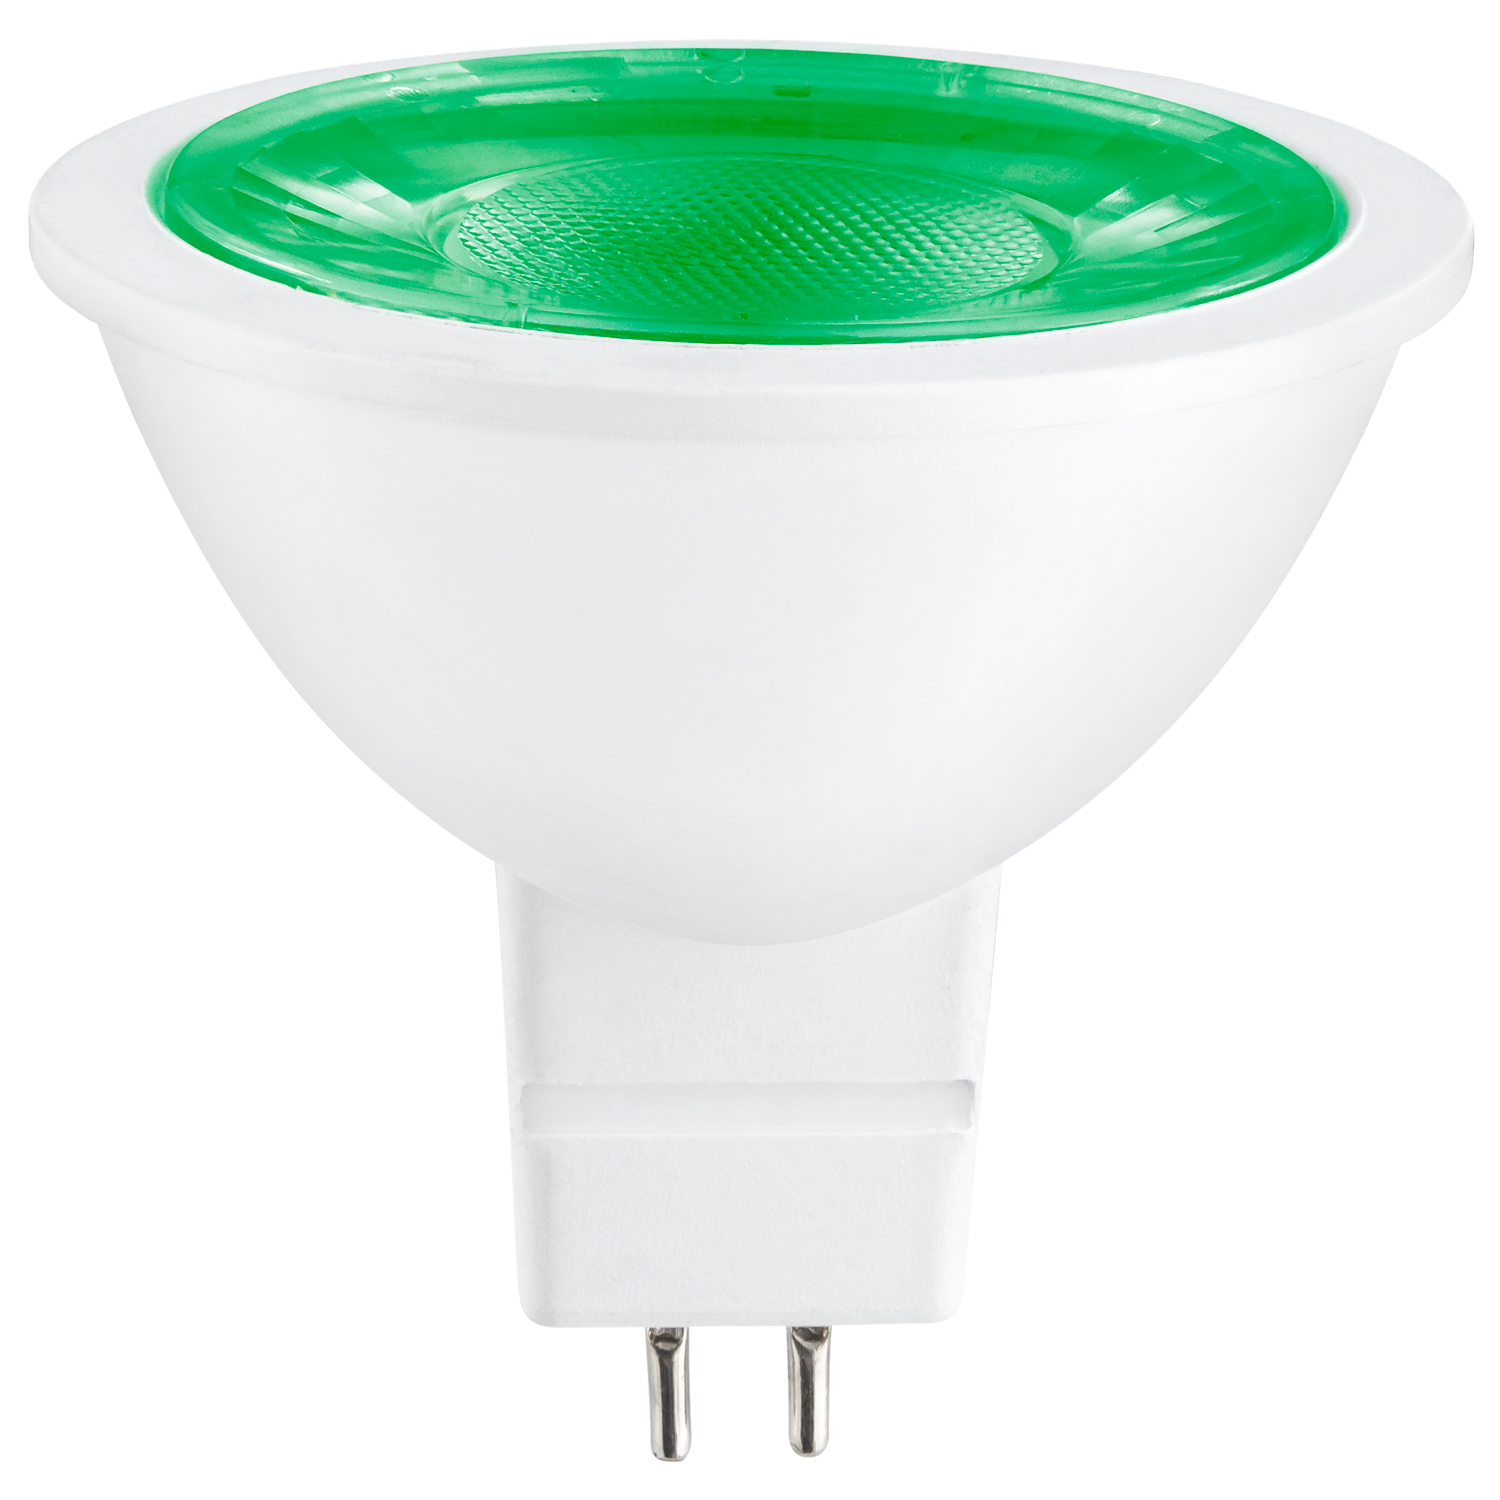 LED MR16 Light Bulb GU5.3 25-Watt Equivalent, Green - Click Image to Close